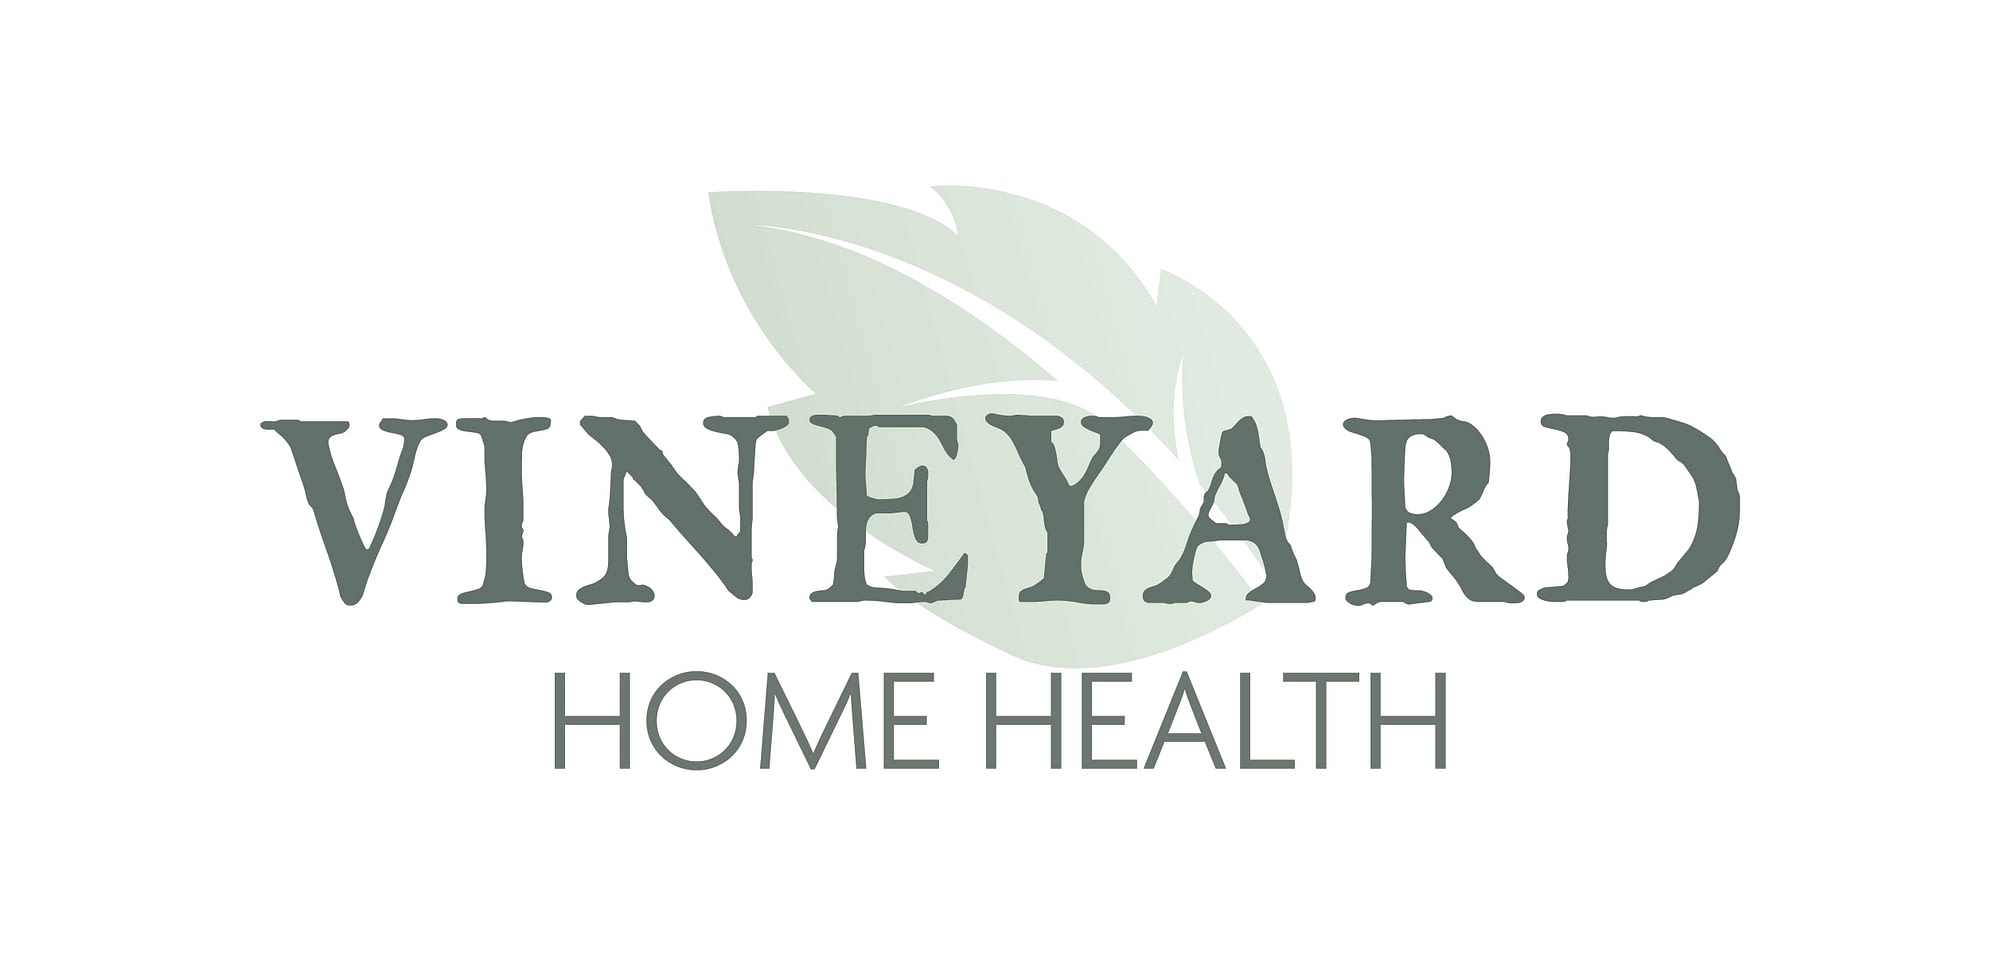 Vineyard Home Health